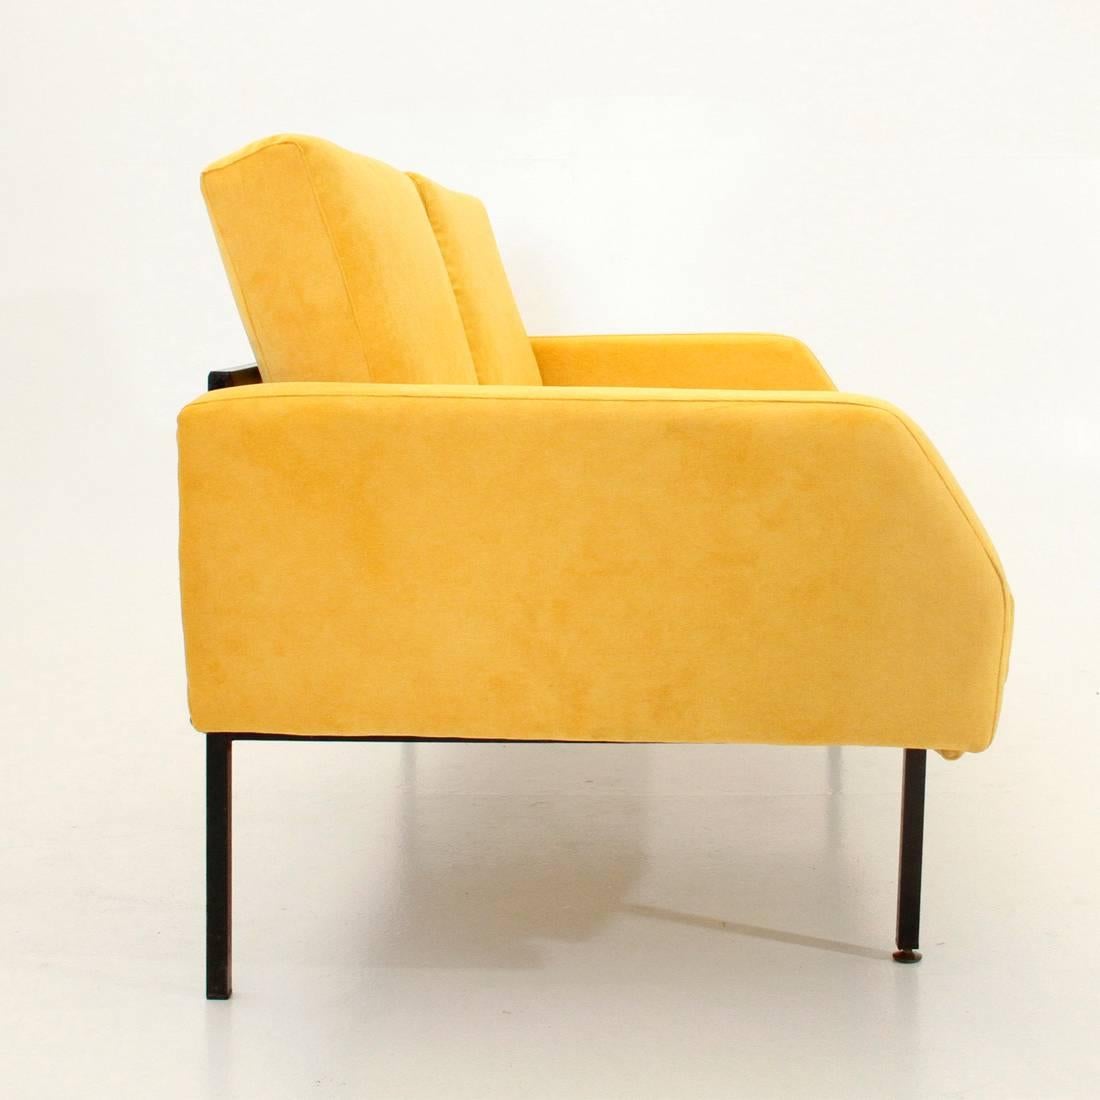 Mid-20th Century Italian Yellow Velvet Sofa Bed